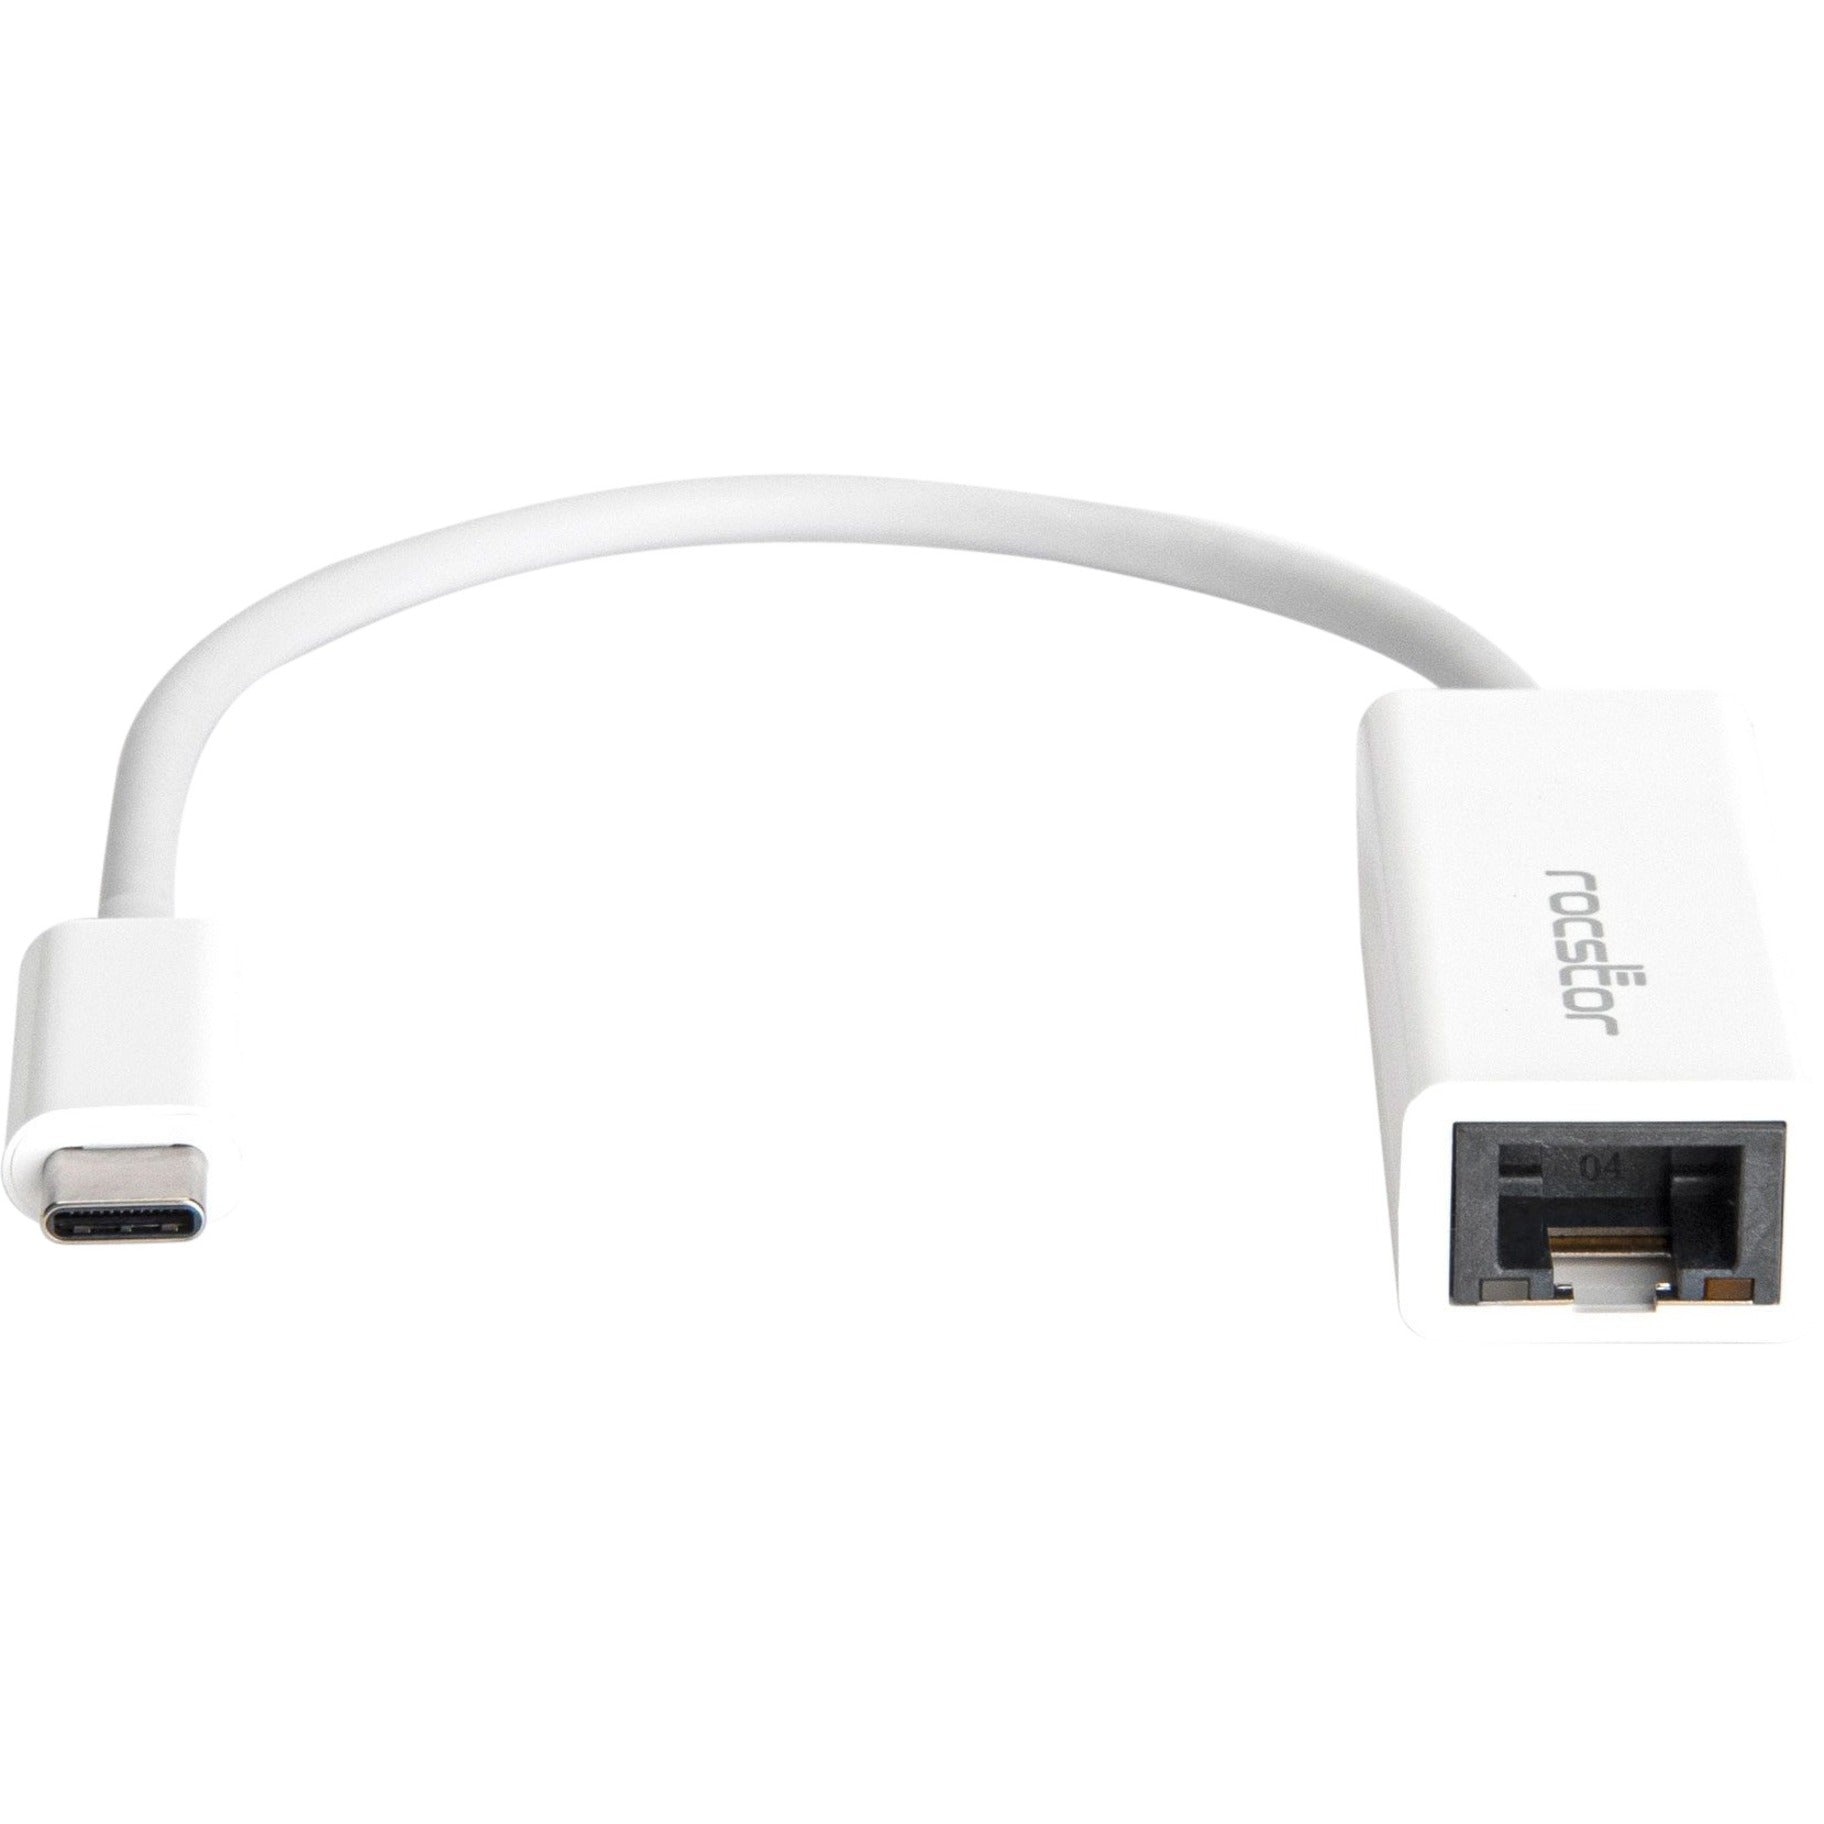 Rocstor Y10A173-W1 Premium USB-C to Gigabit 10/100/1000 Network Adapter - White, USB-C 3.1 to Gigabit 1000Mbps